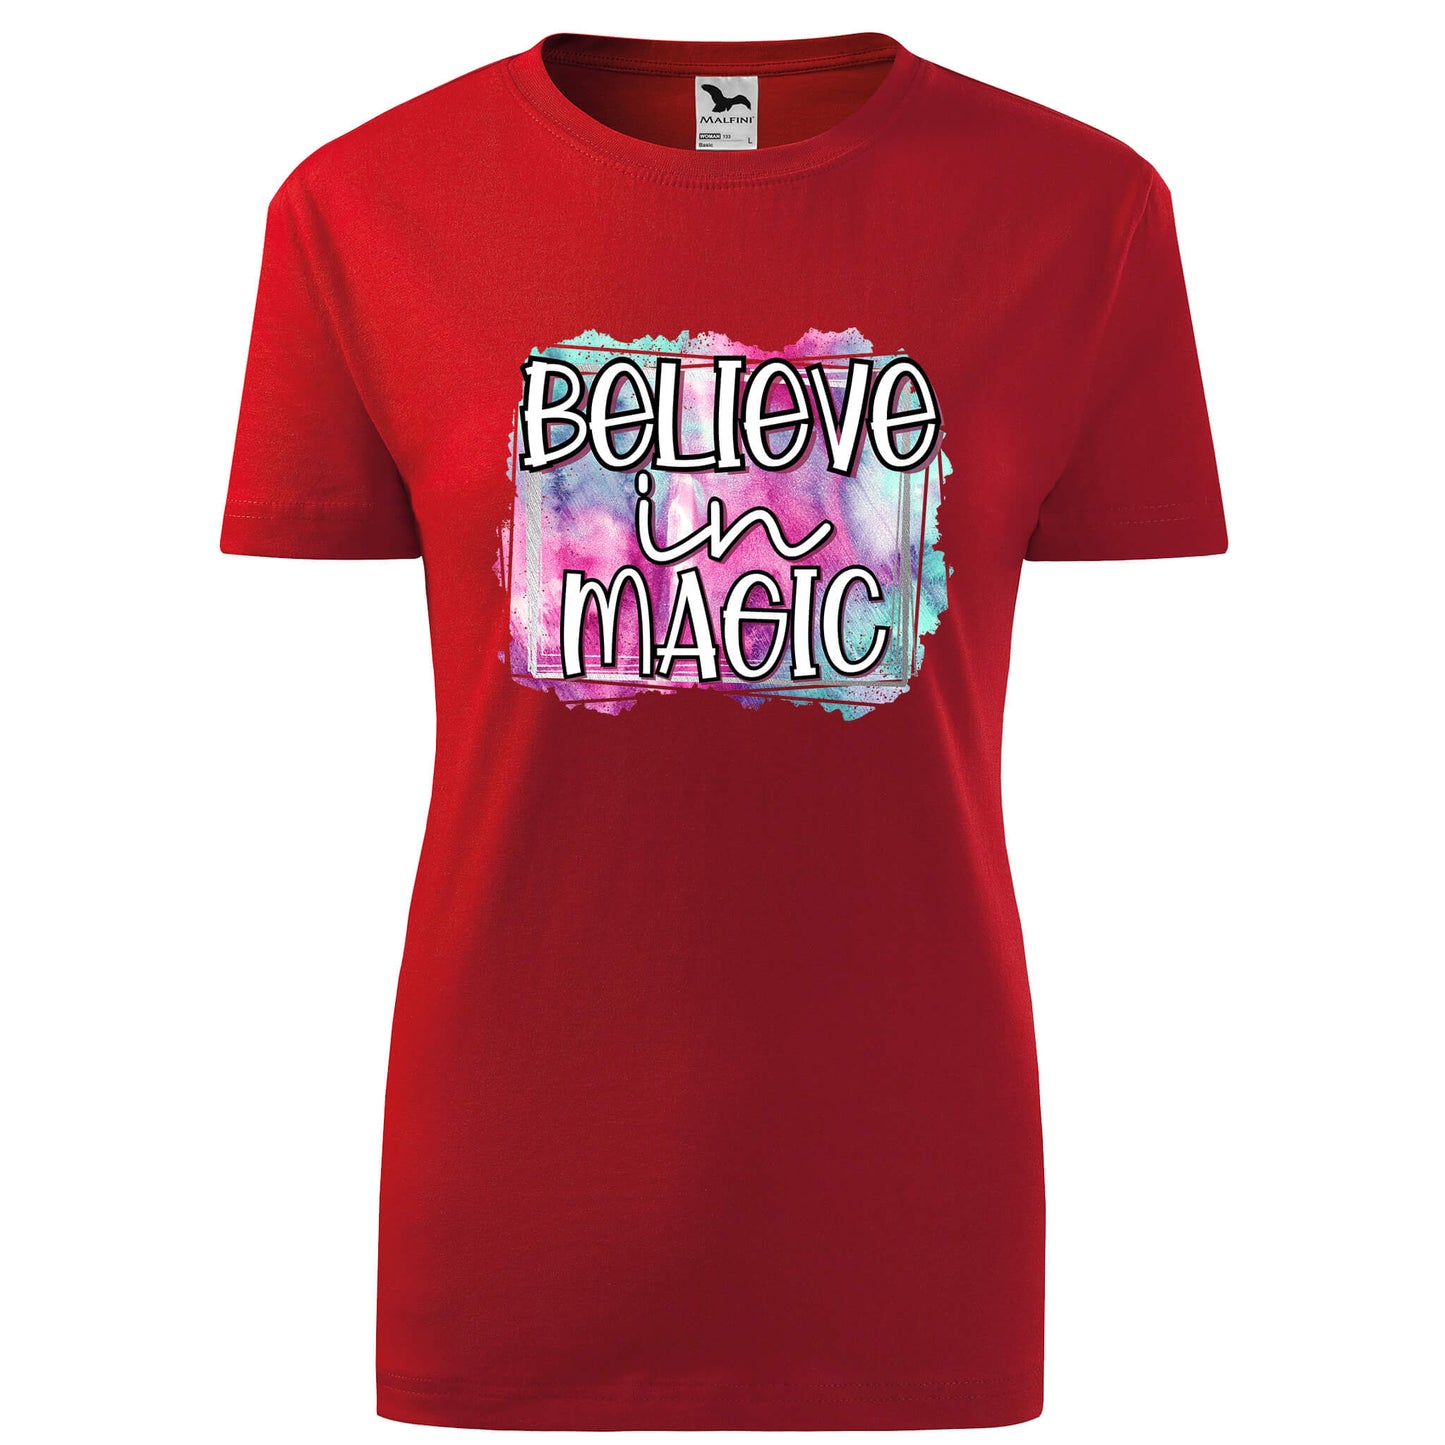 Believe in magic t-shirt - rvdesignprint